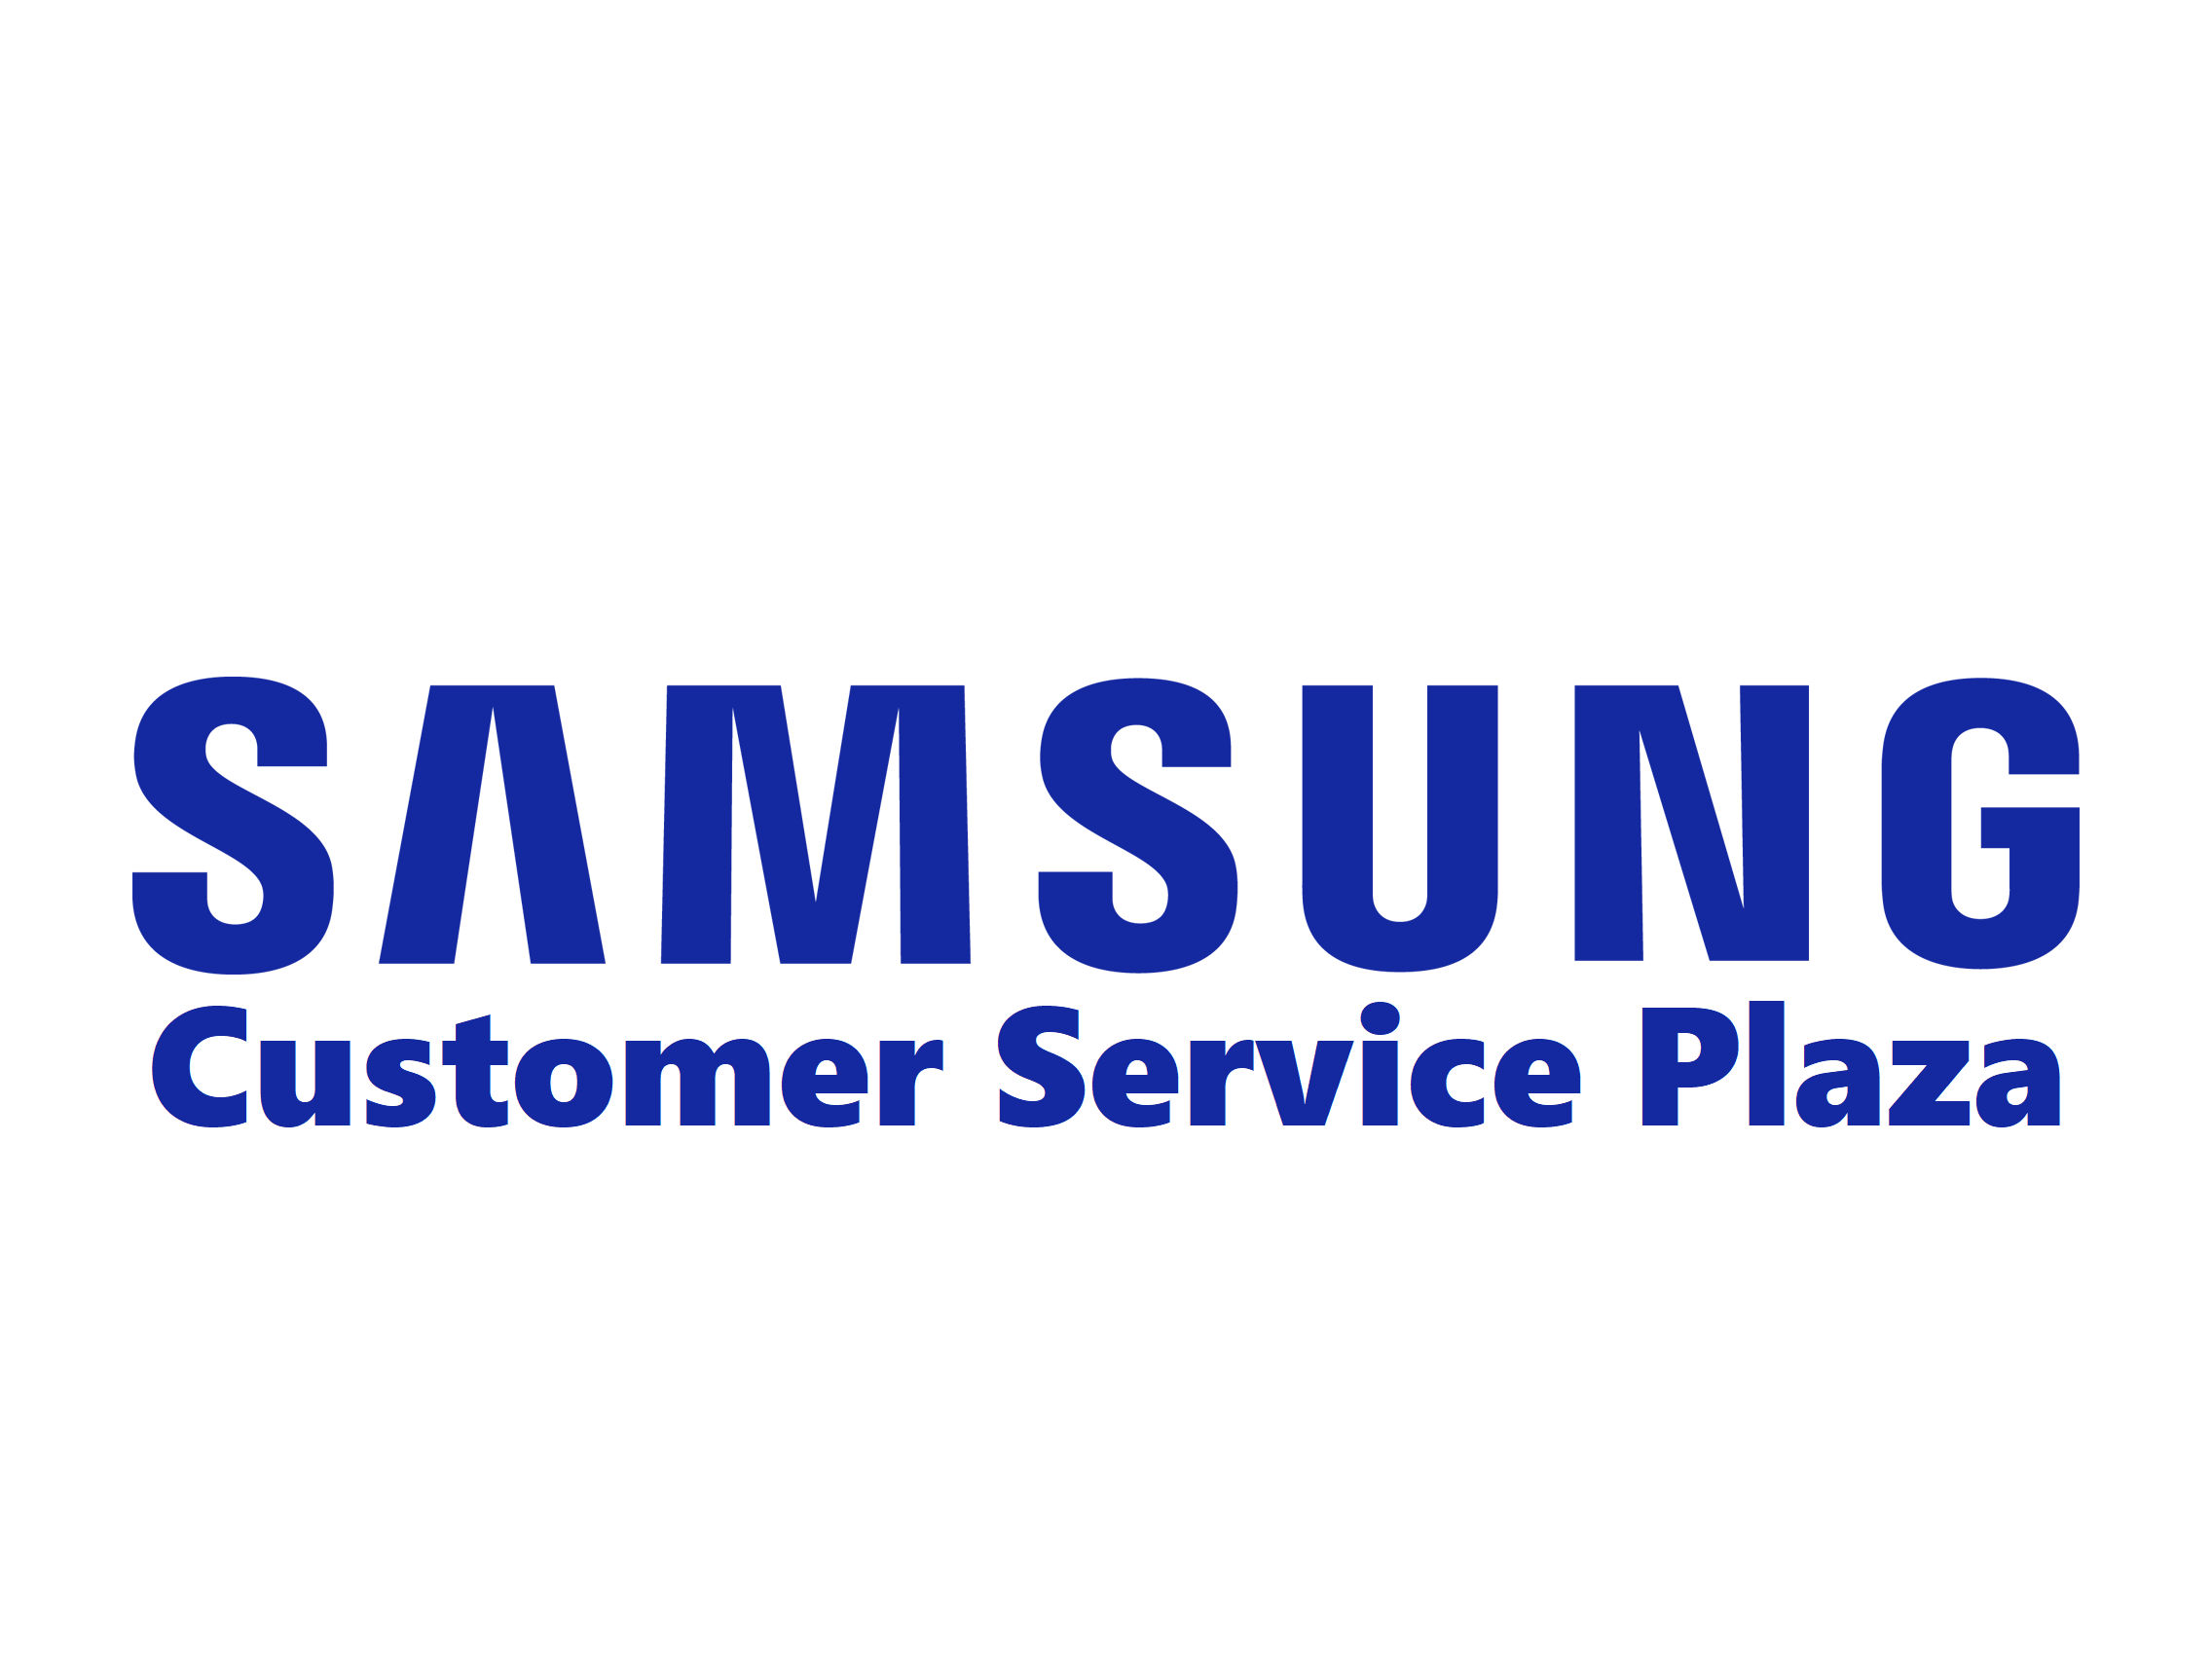 Samsung Customer Service Plaza